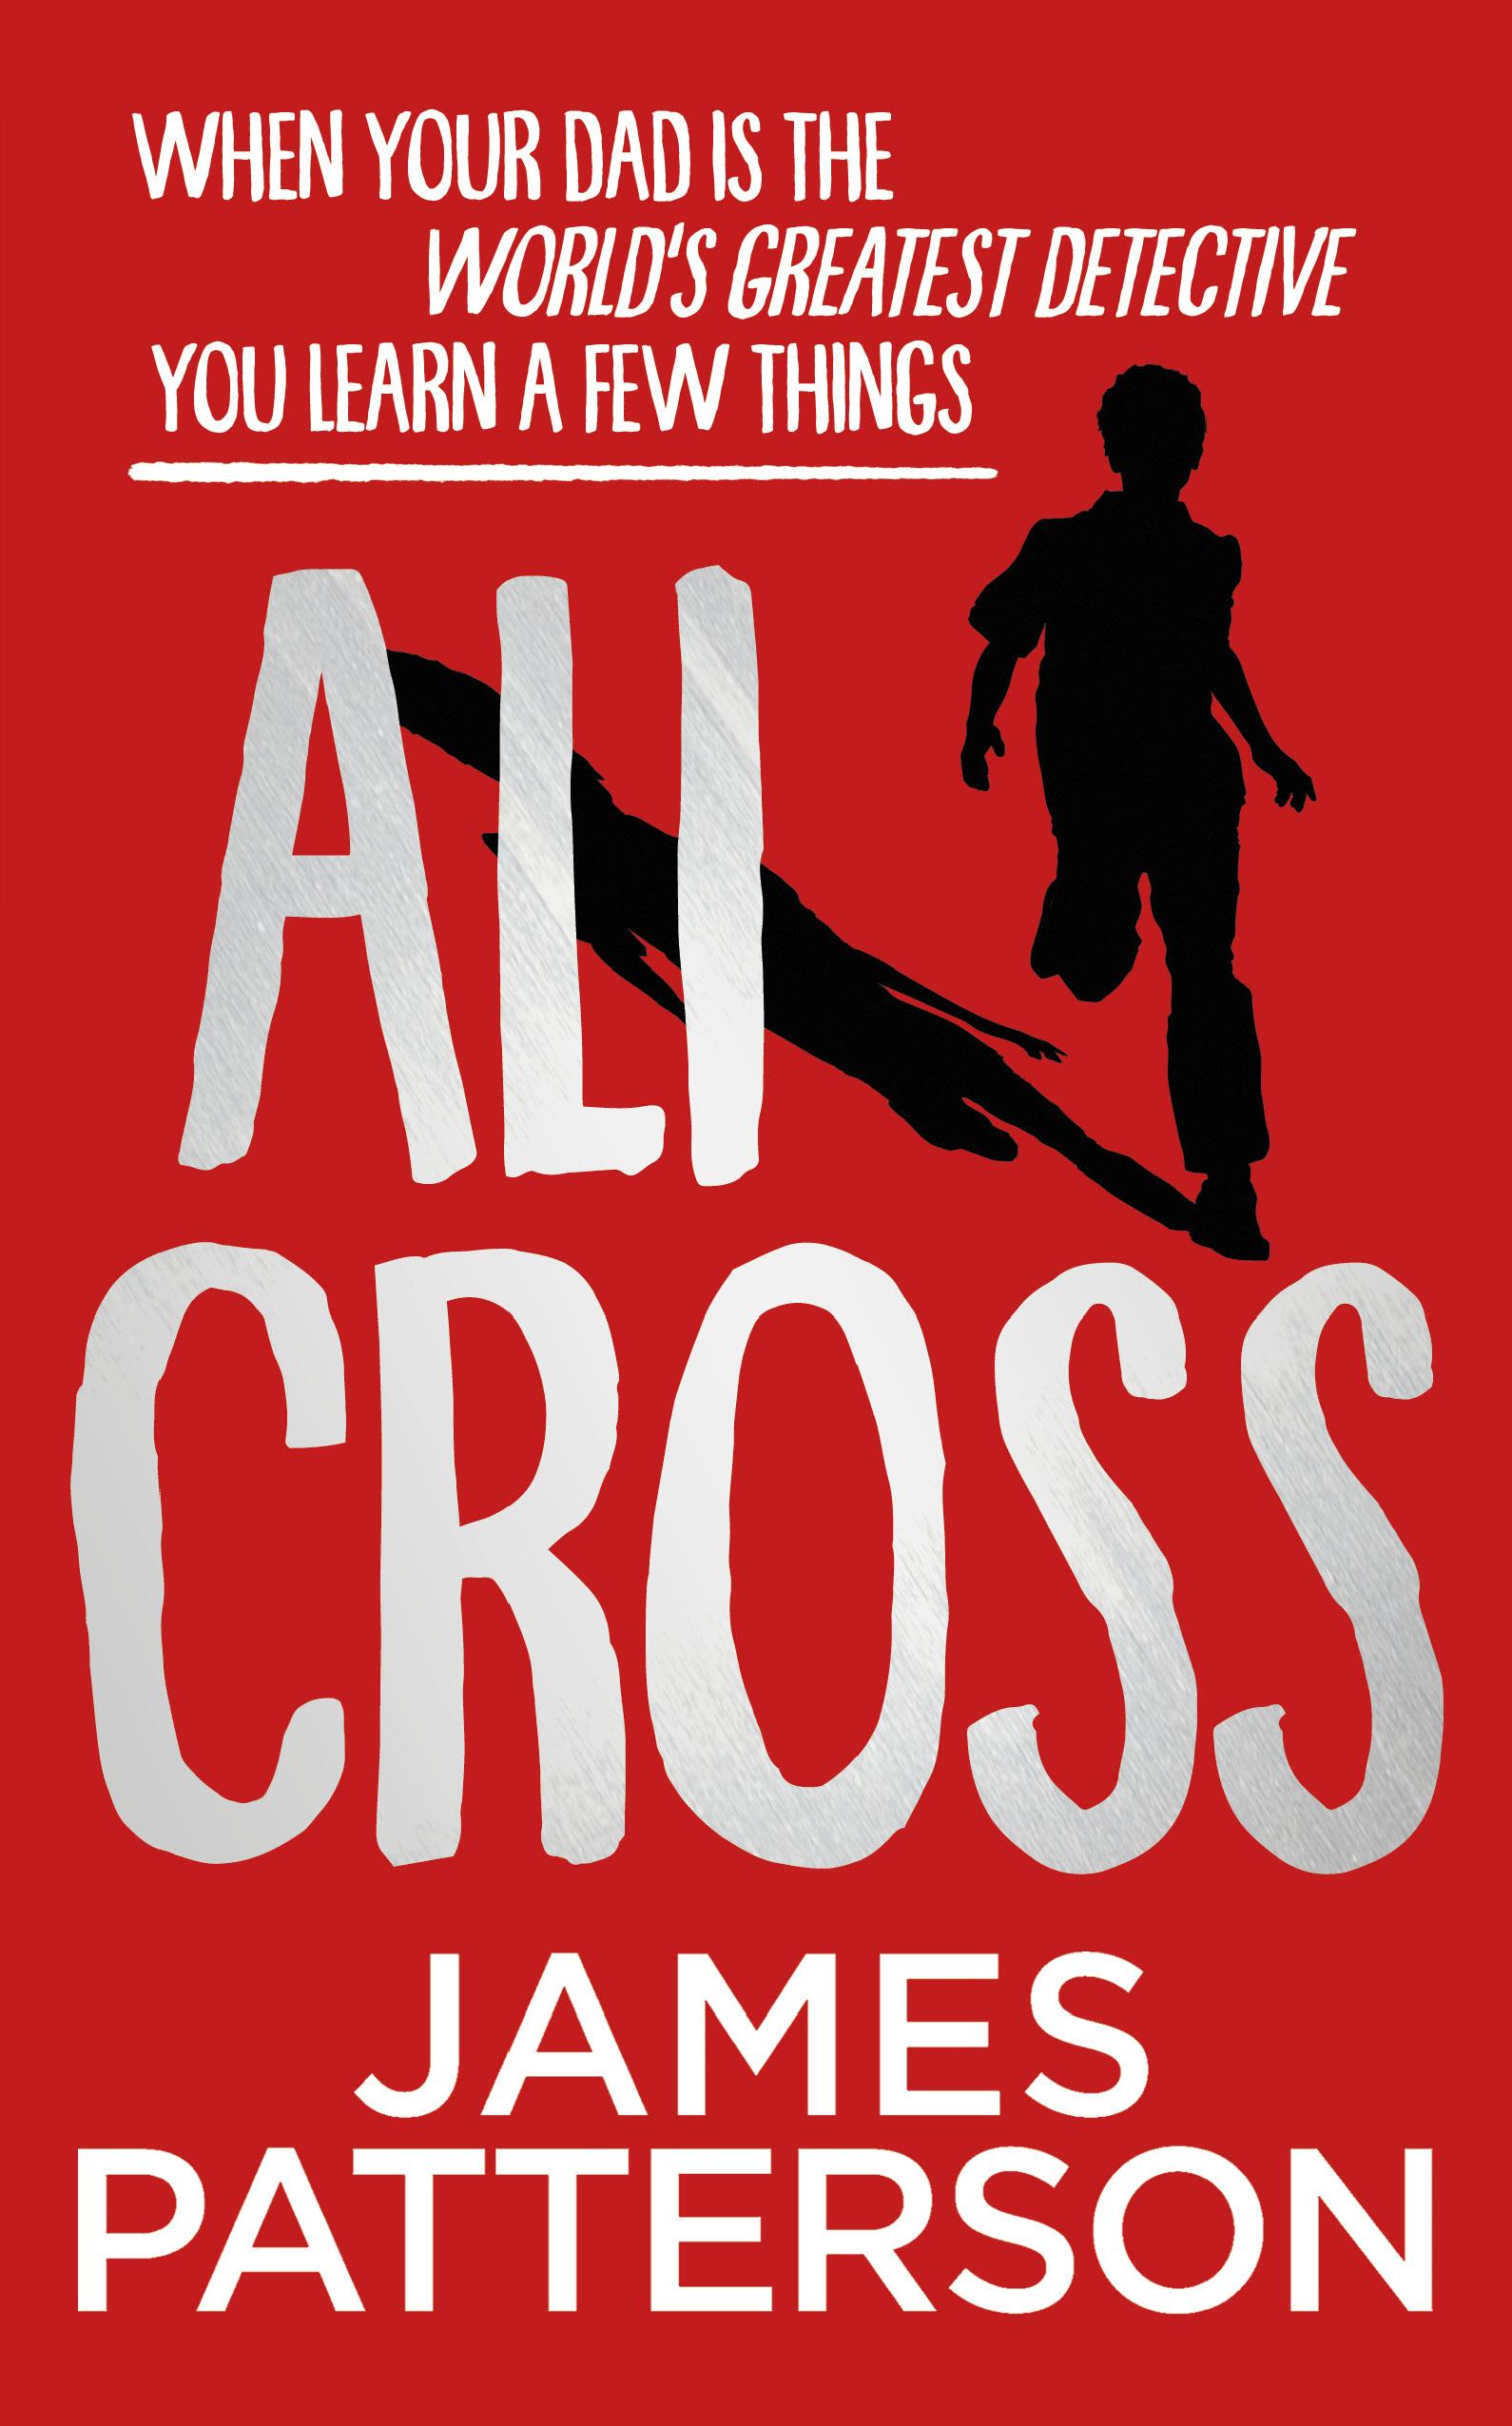 Ali Cross - James Patterson